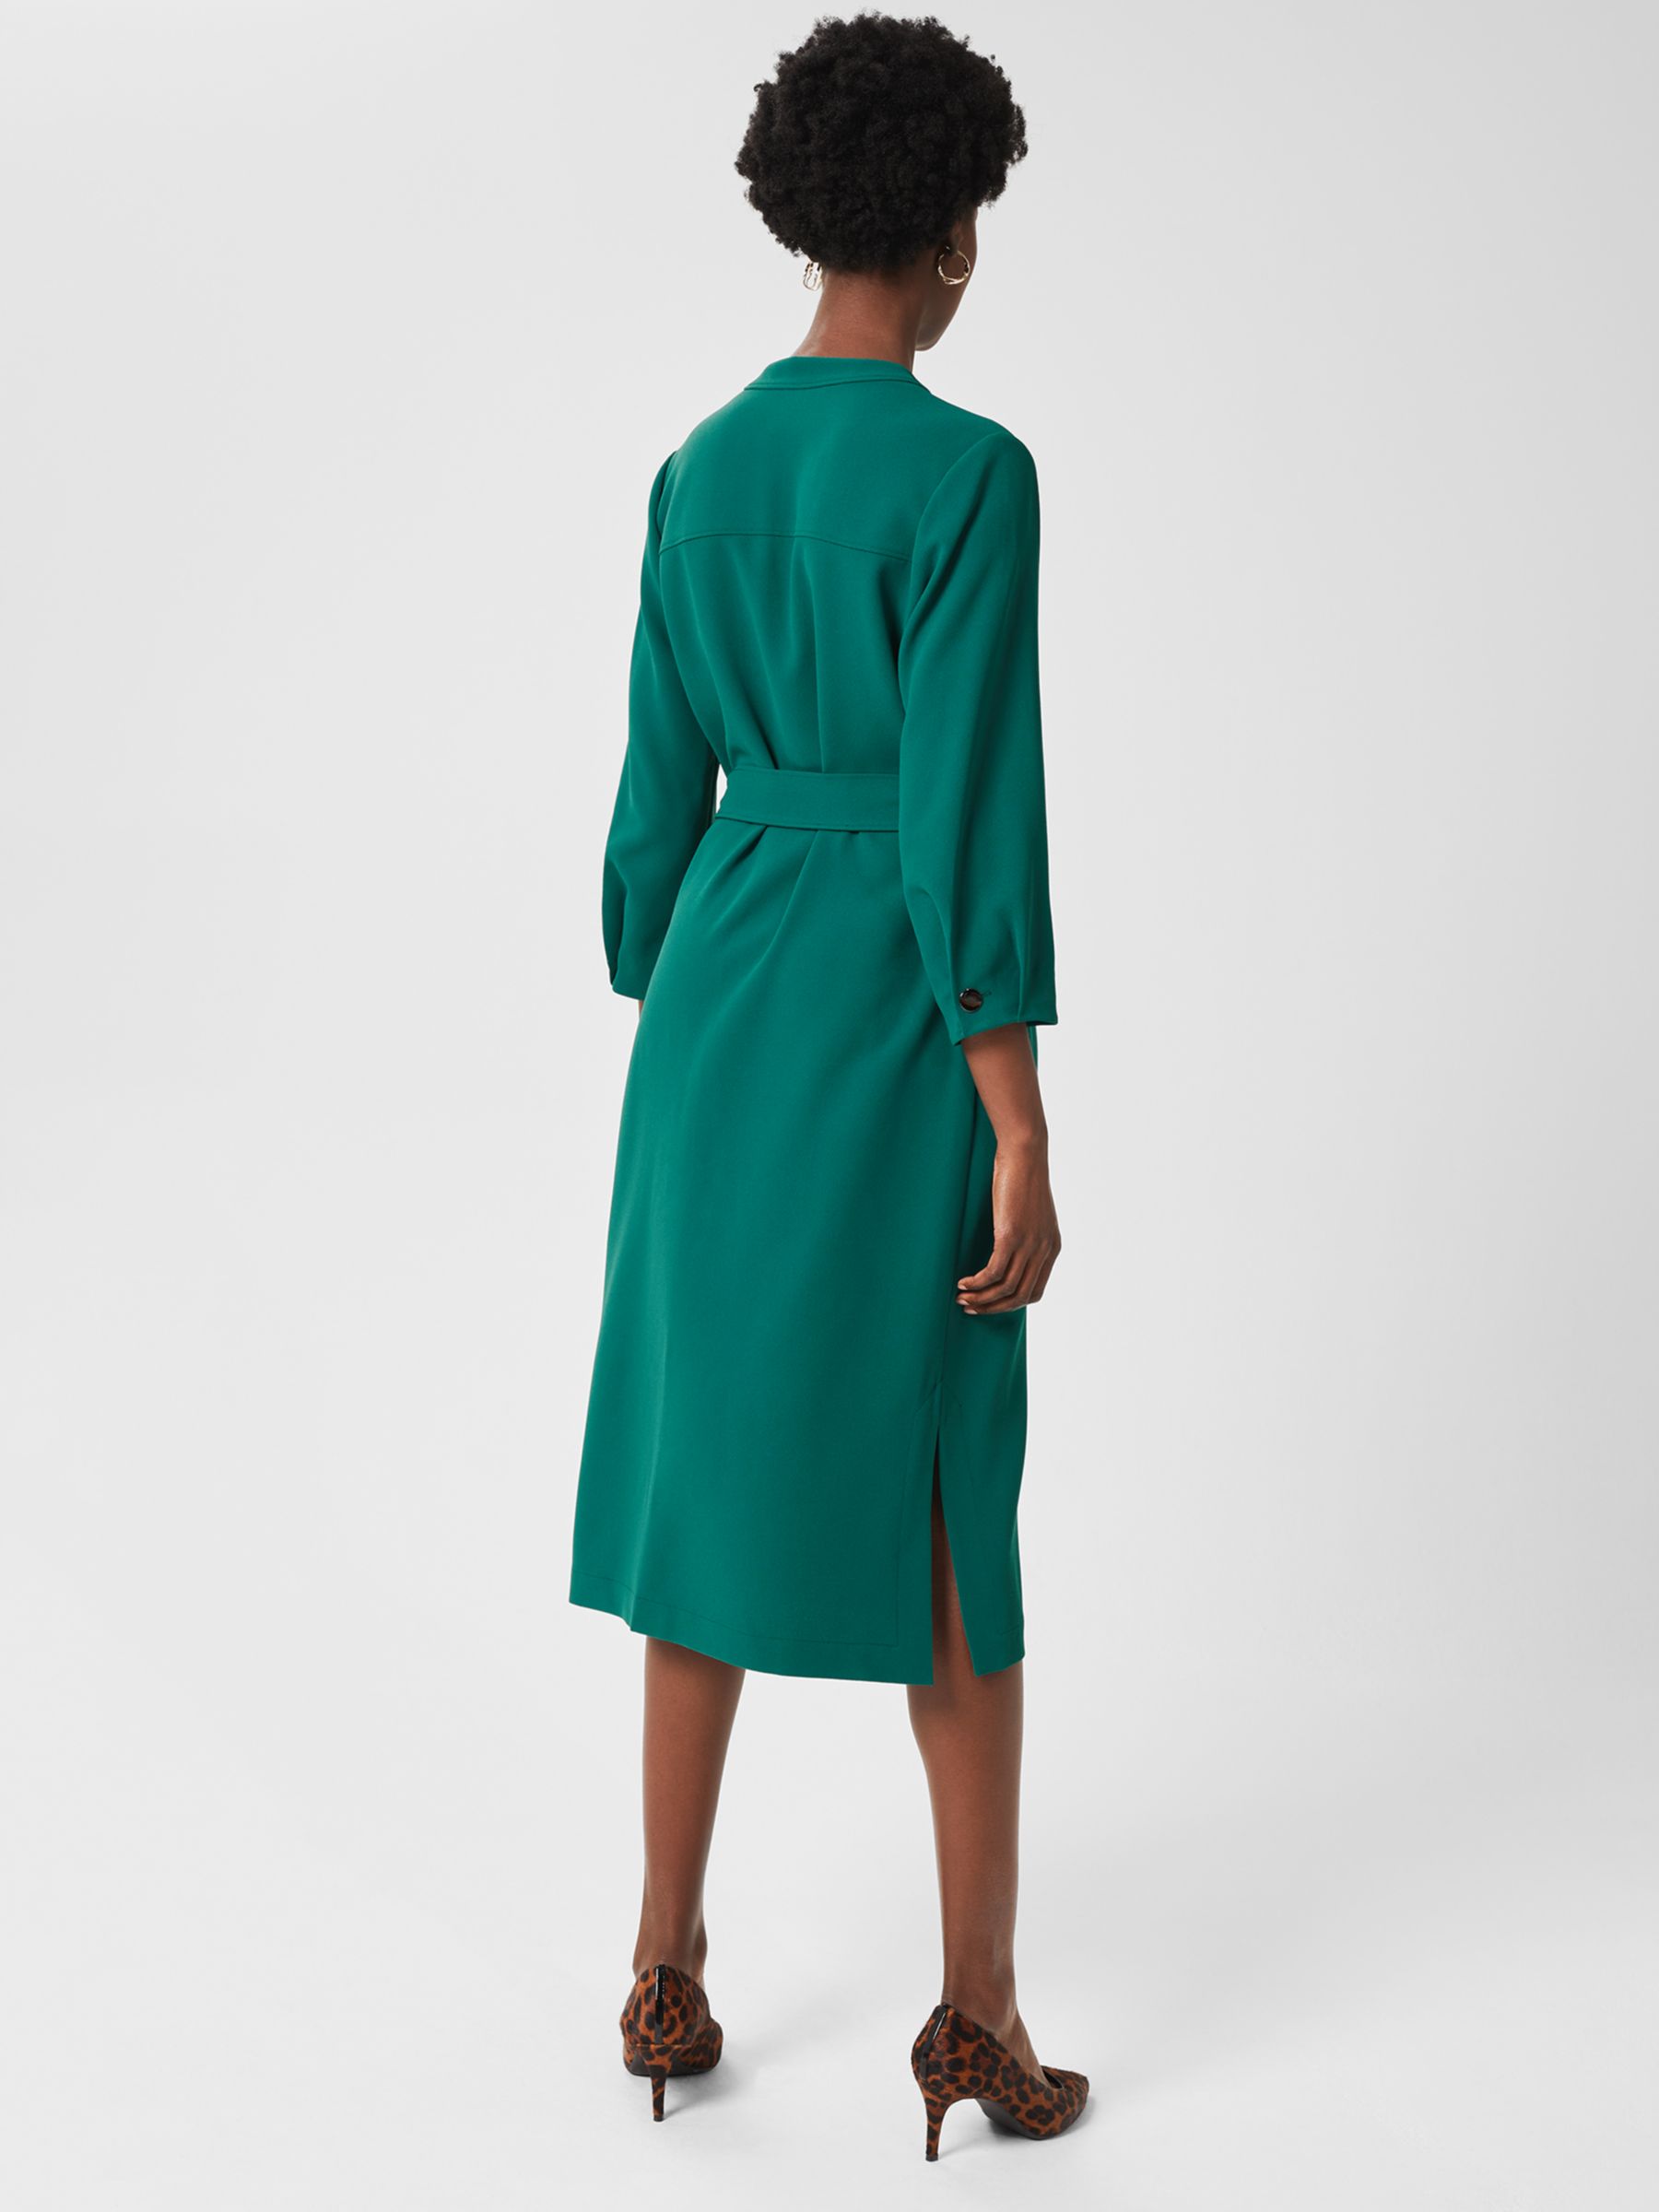 Hobbs Kirsty Belted Midi Dress, Jade Green at John Lewis & Partners